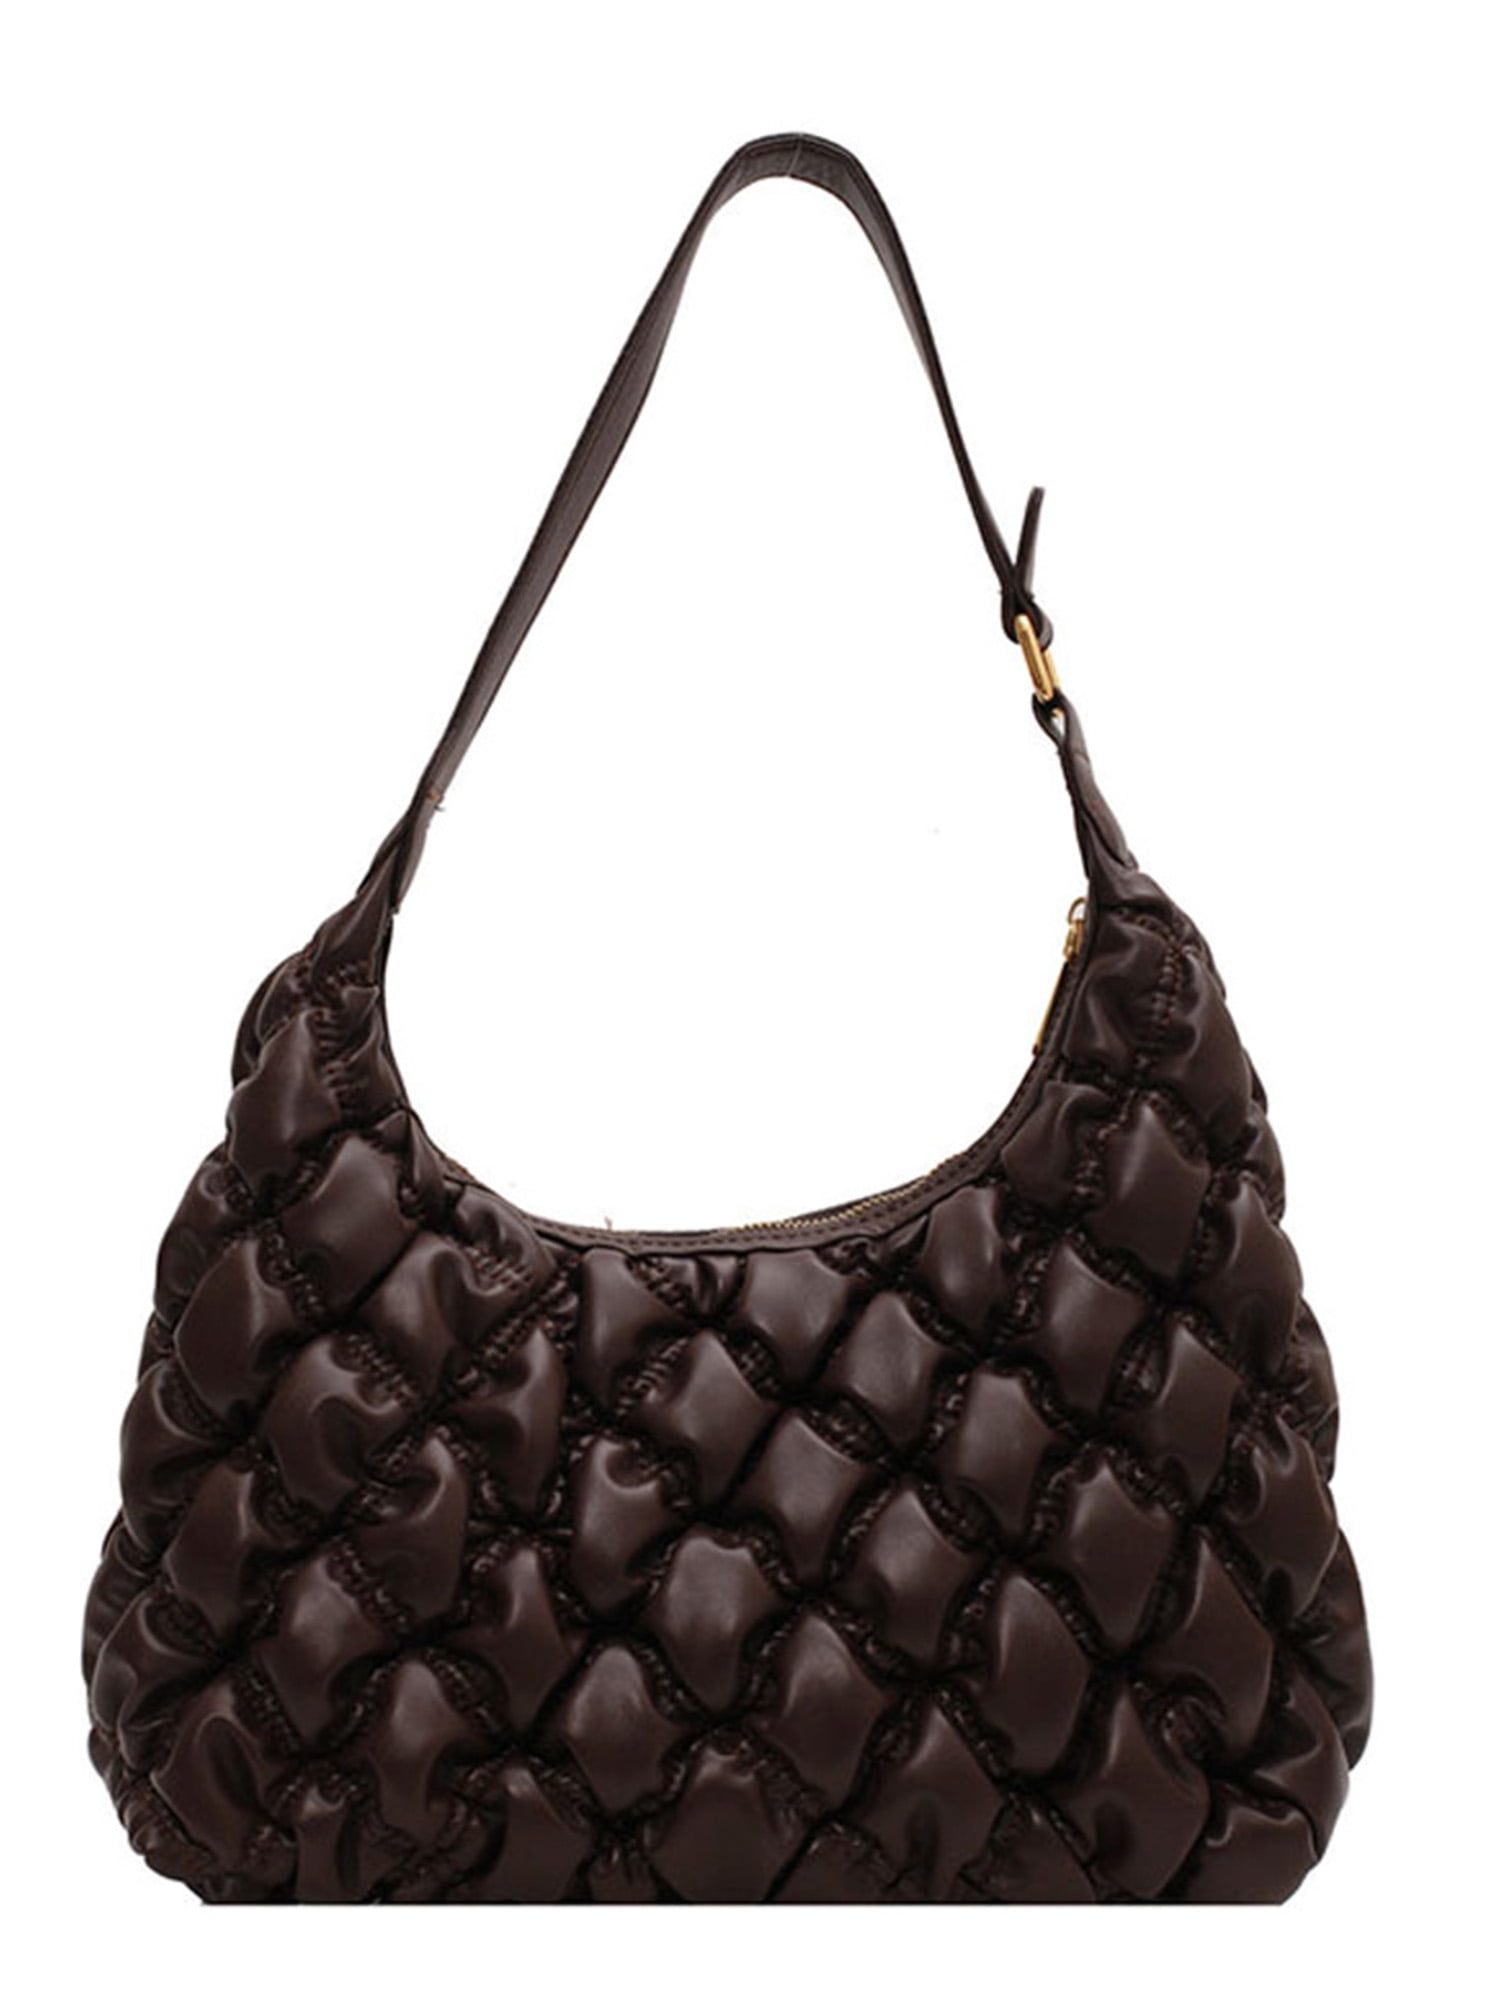 Womens Top Handle Satchel Handbag Decorative Feathers Pattern Ladies PU Leather Shoulder Bag Crossbody Bag